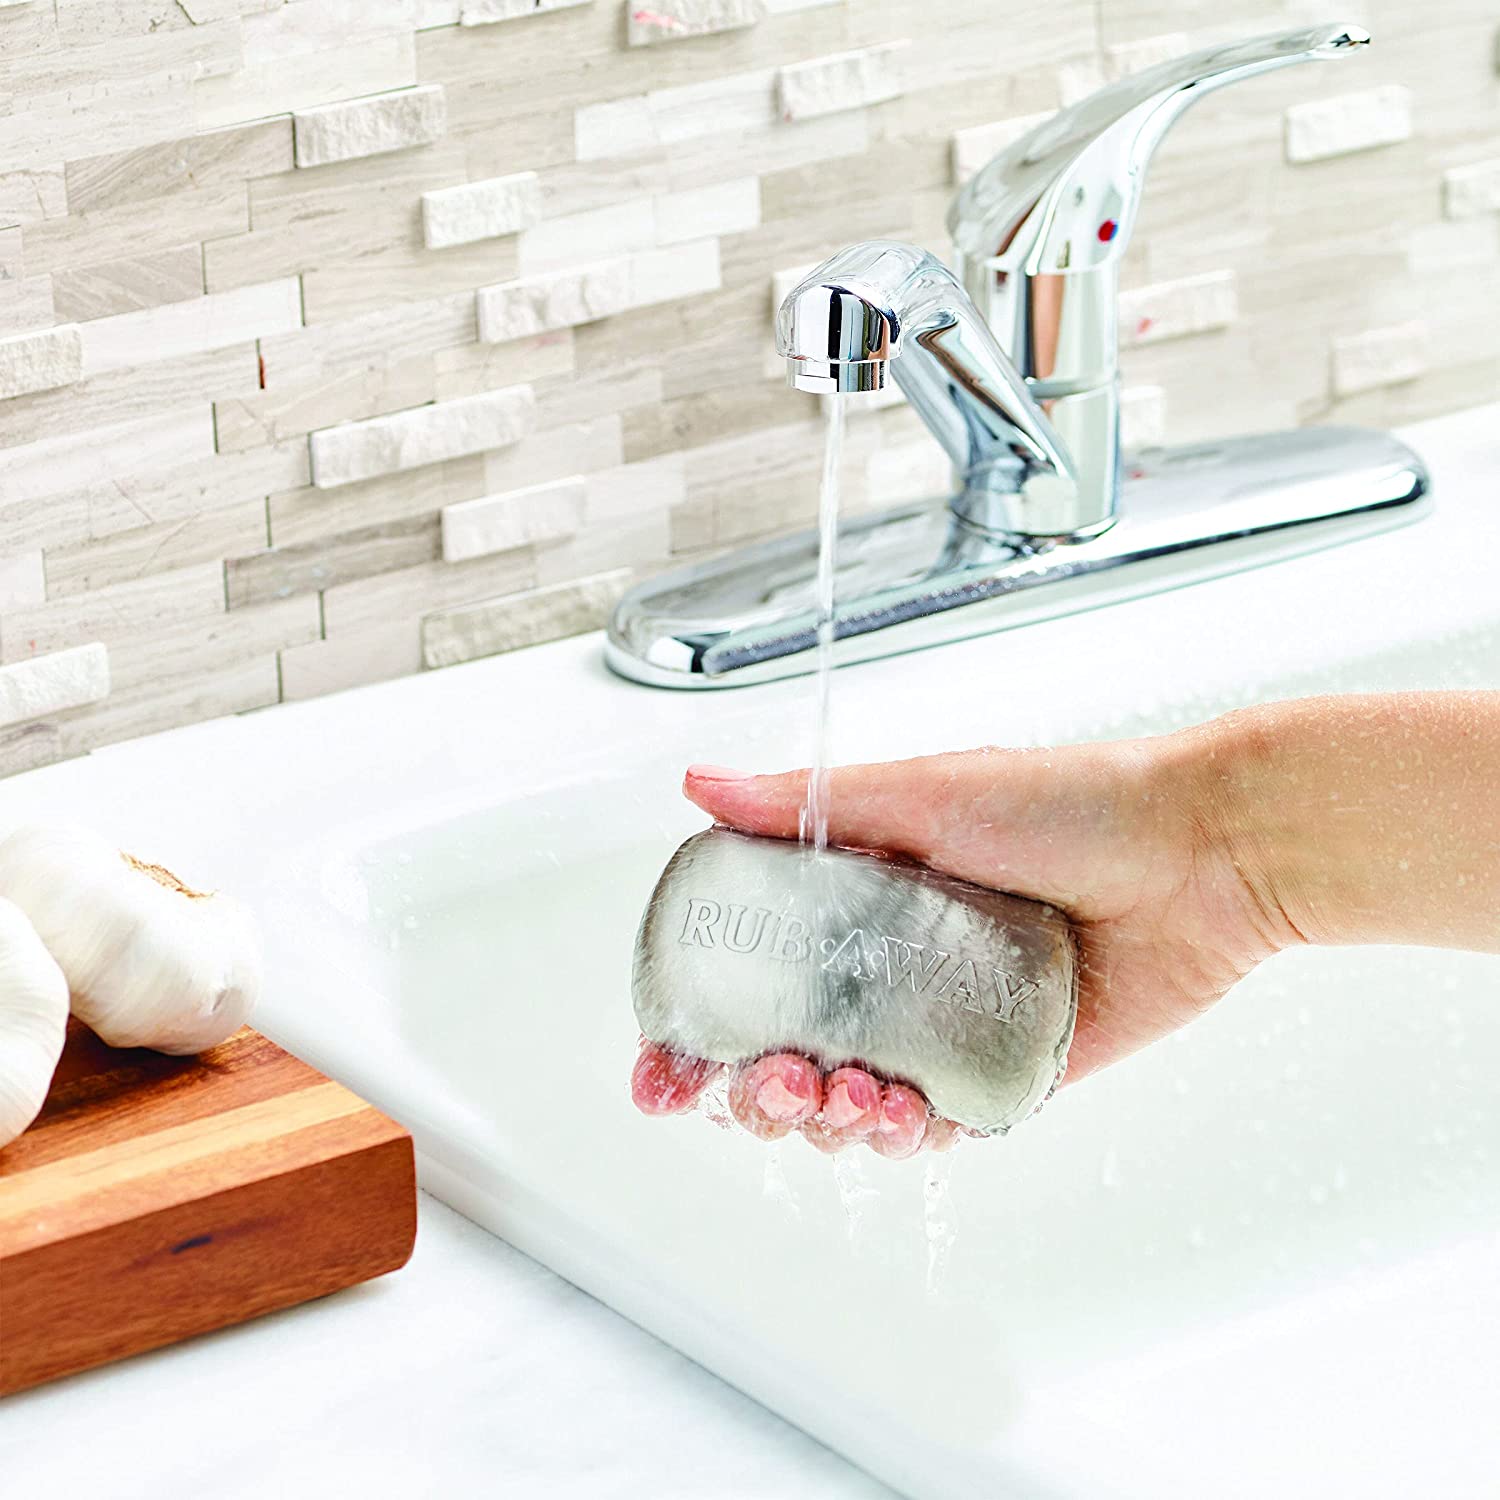 6 BARS Stainless Steel Soap Hand Odor Remover Bar Great Stocking Stuffer